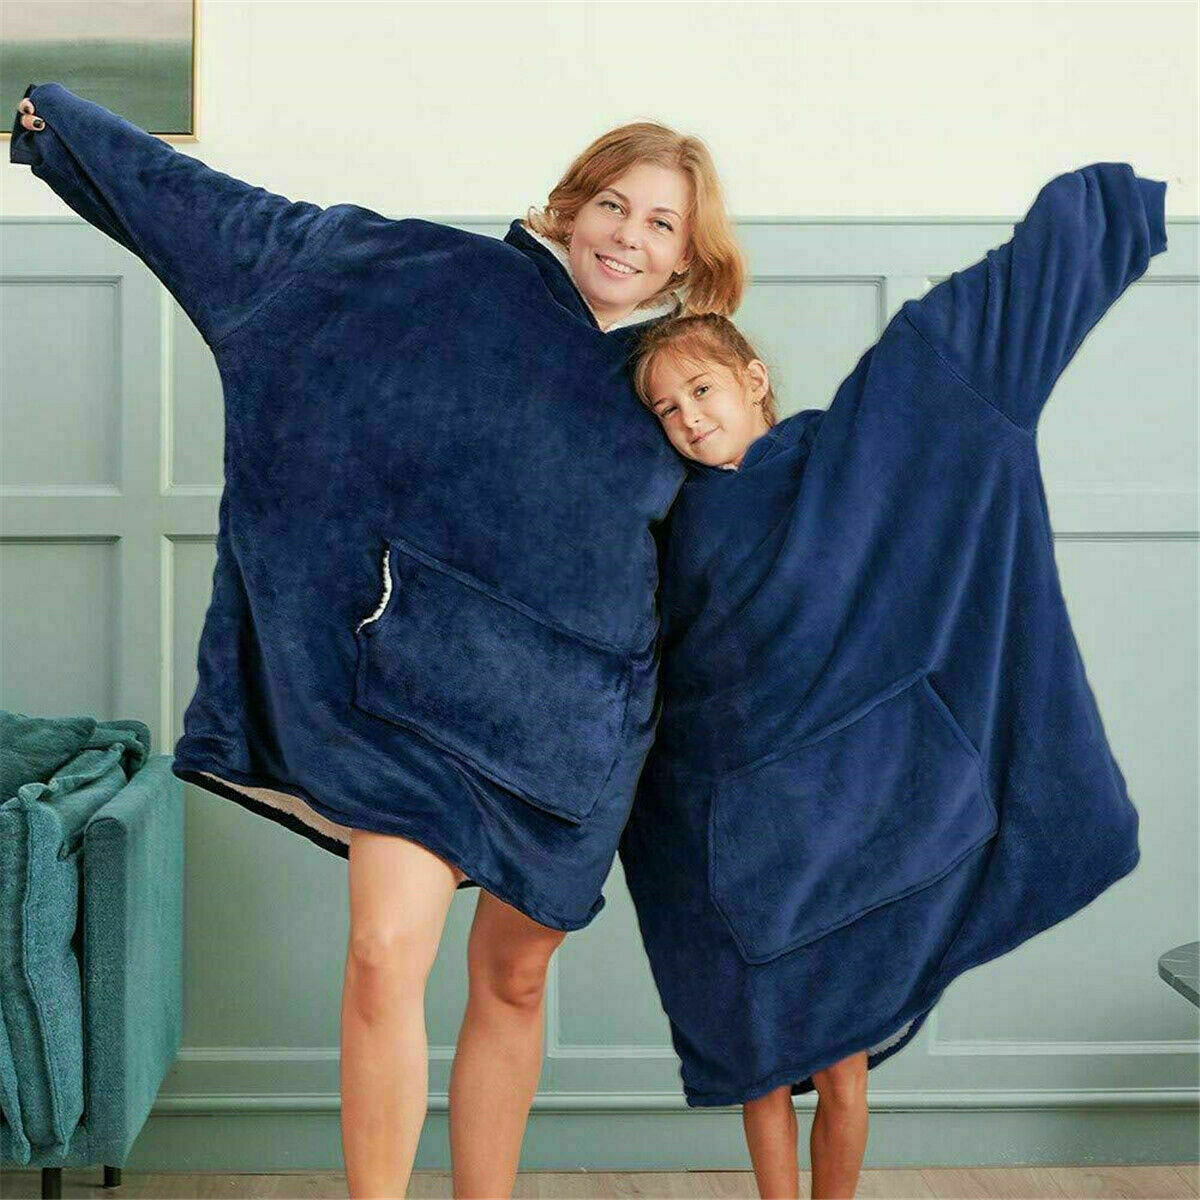 Free shipping-Blanket Sweatshirt Hoodie Ultra Plush Blanket Hoodie Soft & Warm